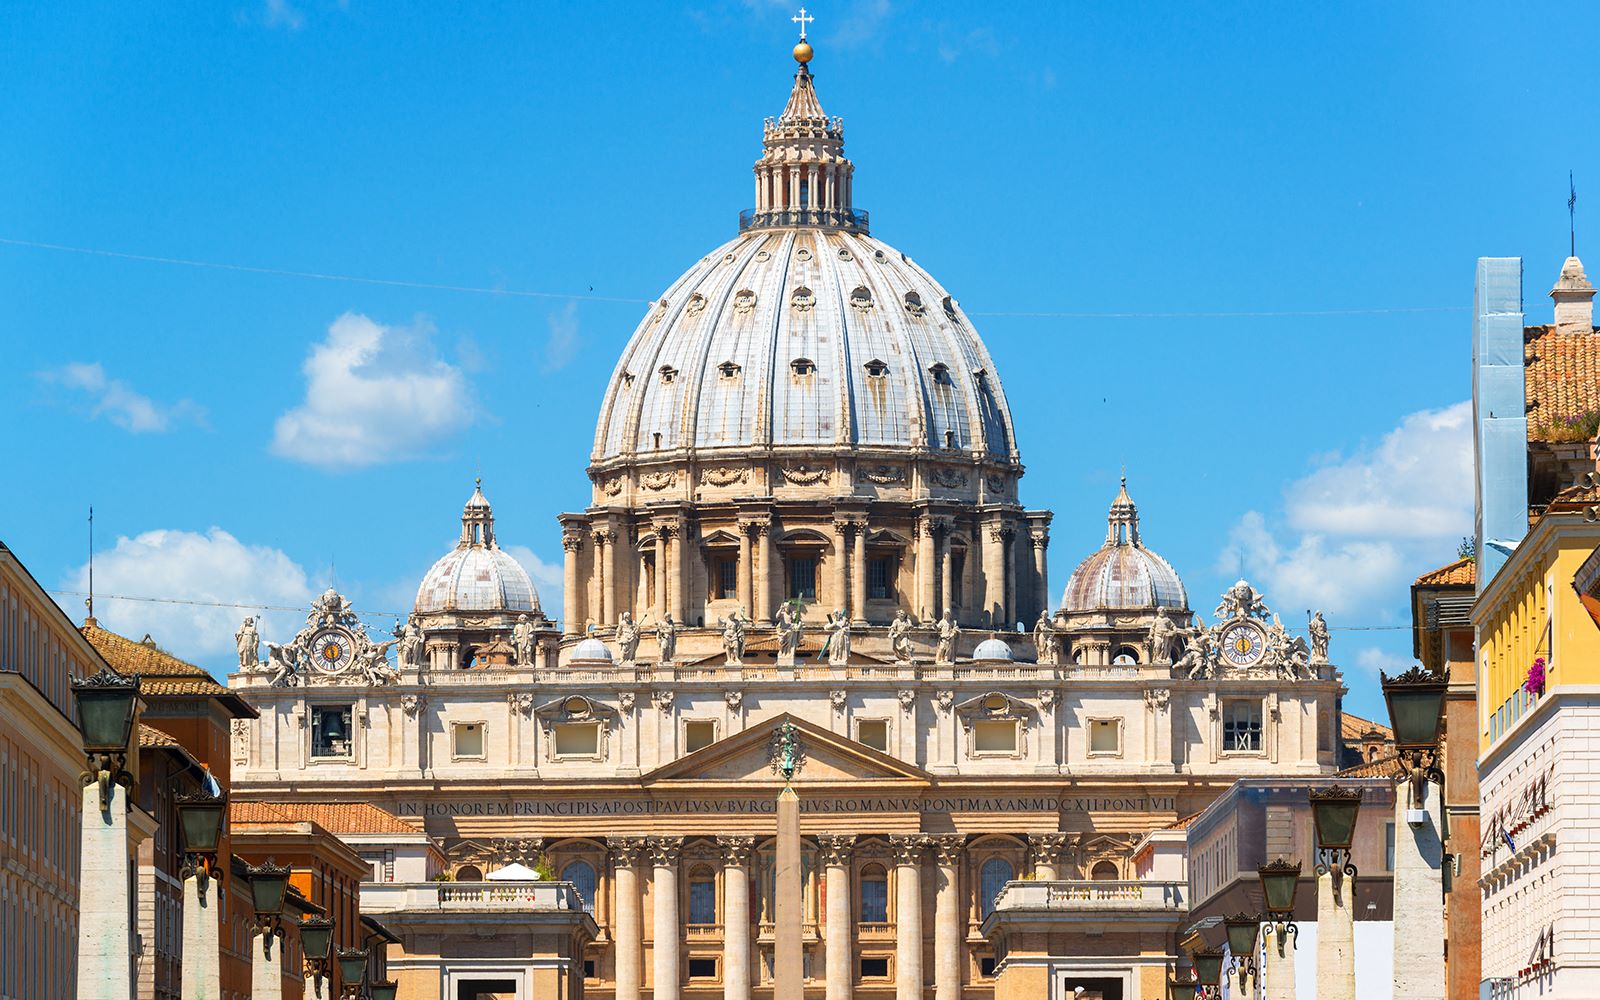 Who Designed St. Peter's Basilica